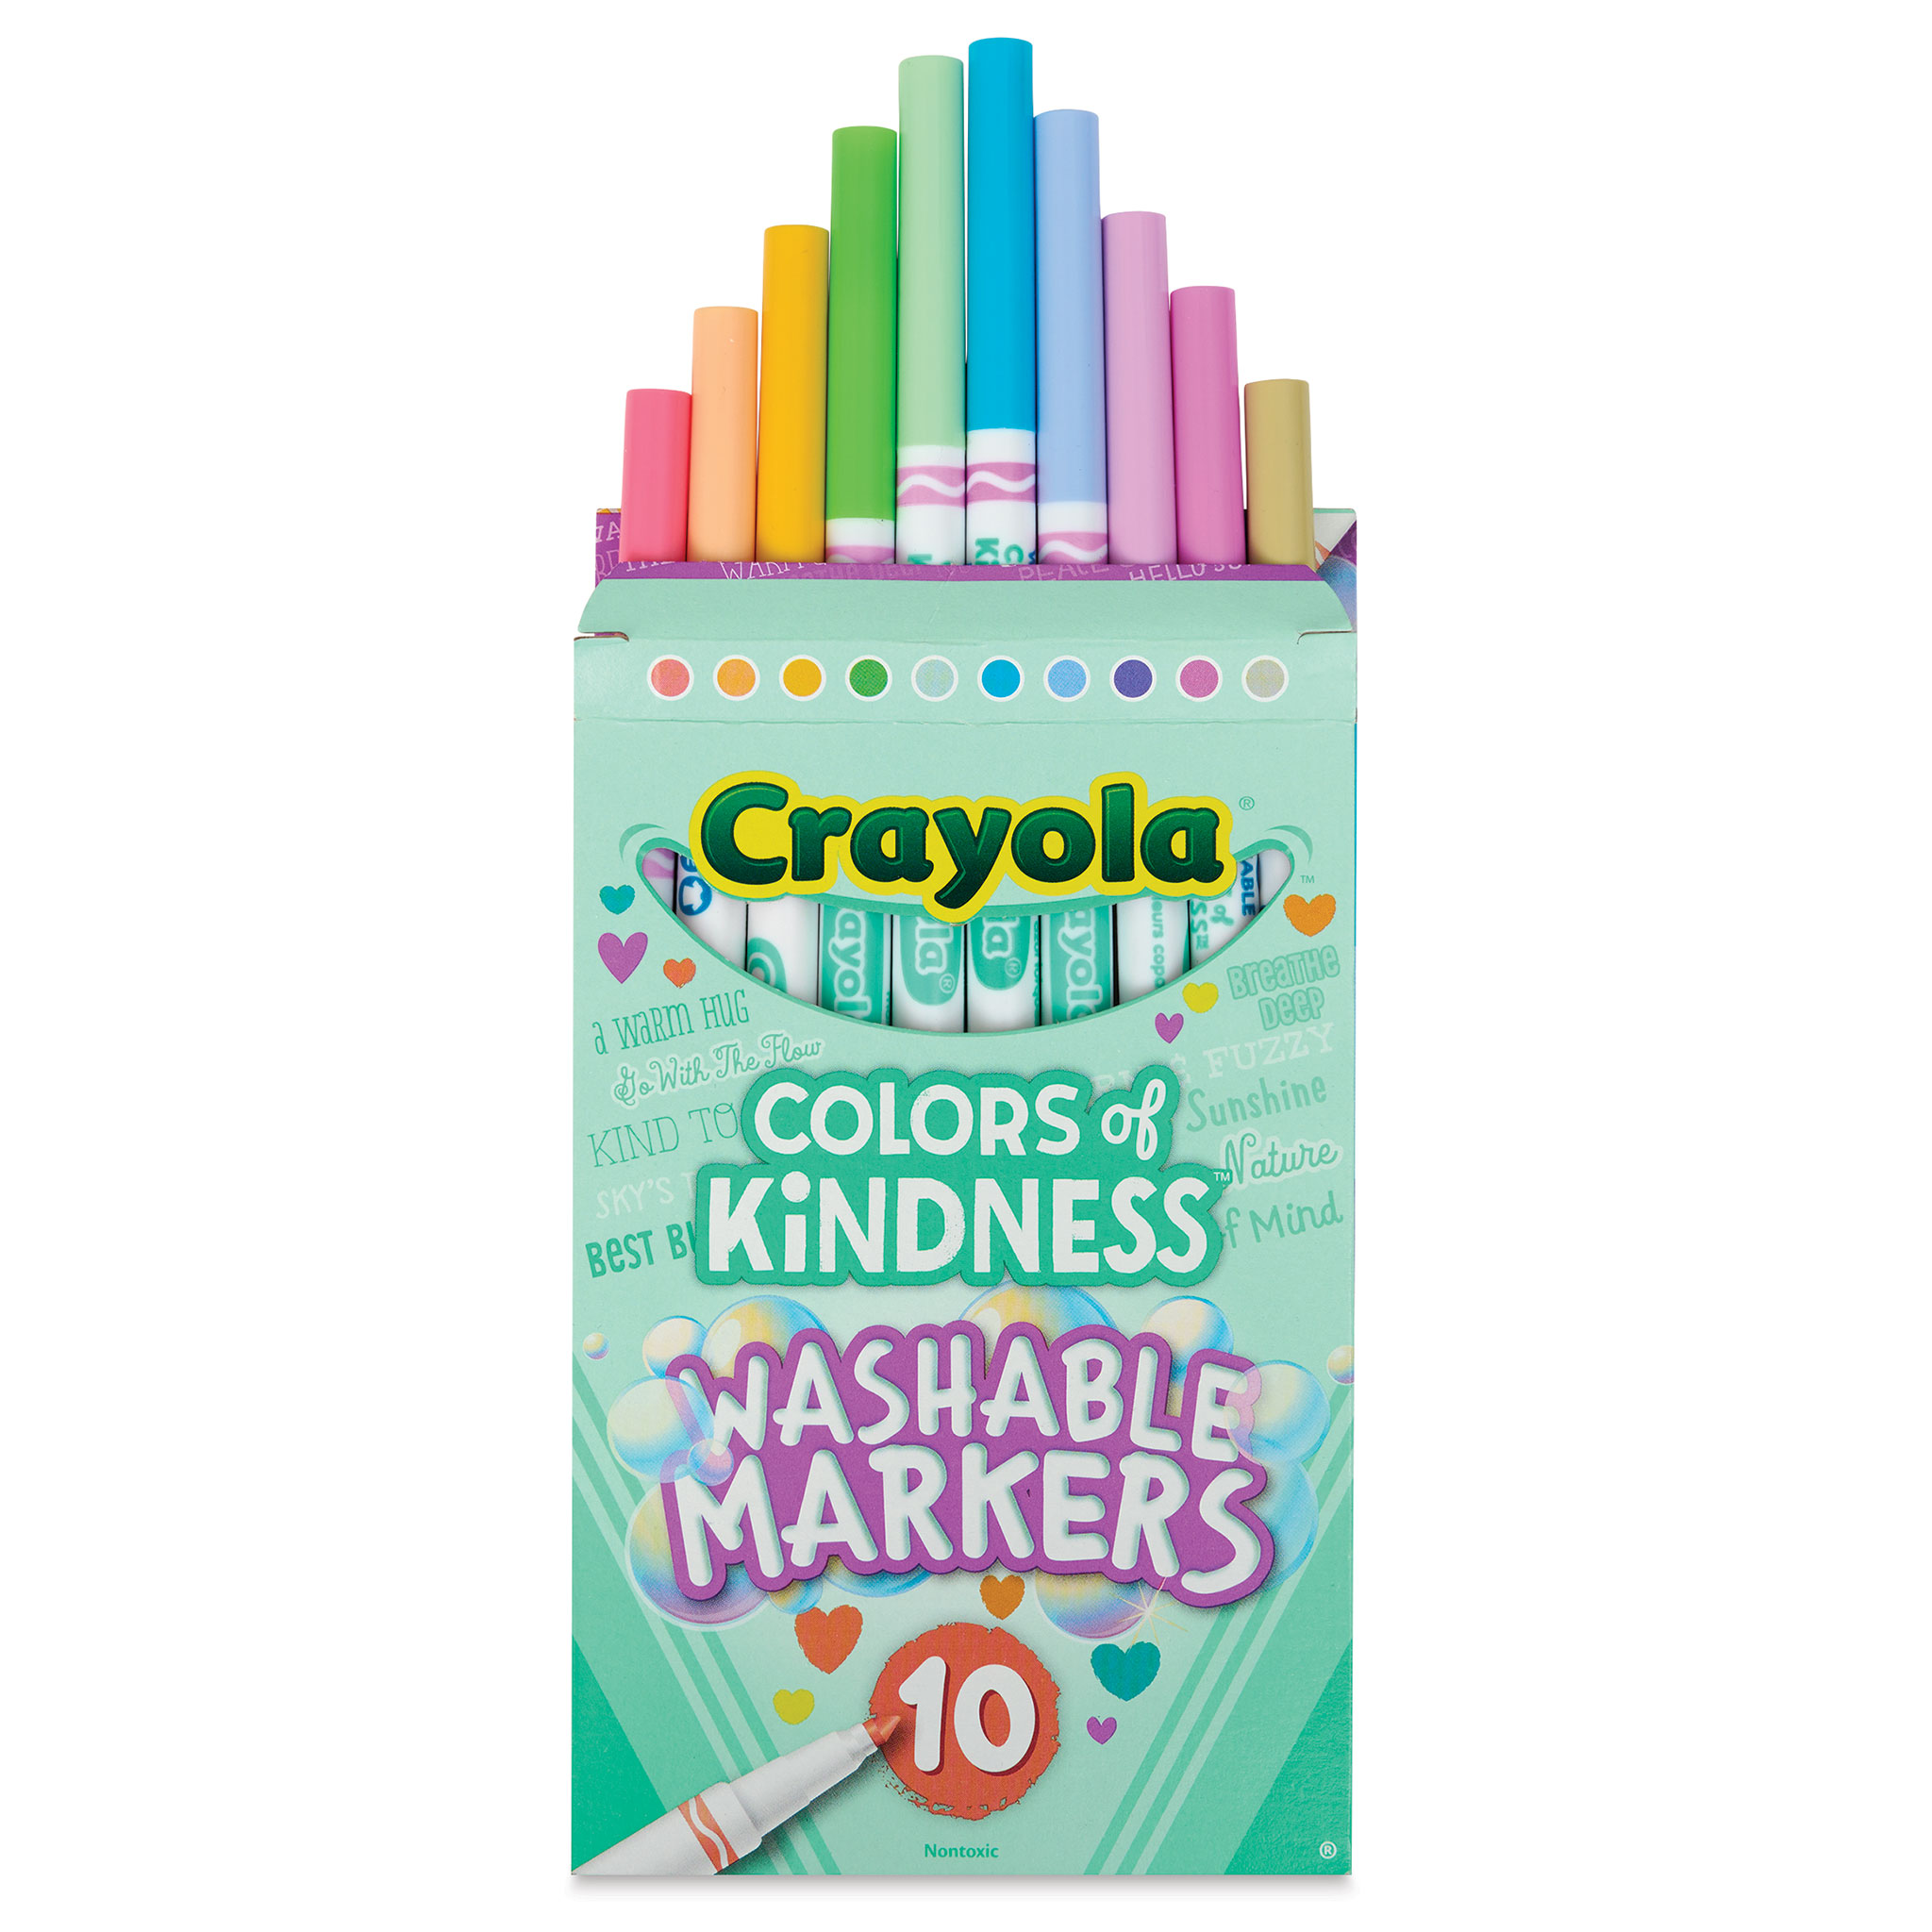 Crayola Kindness Fine Line Washable Markers